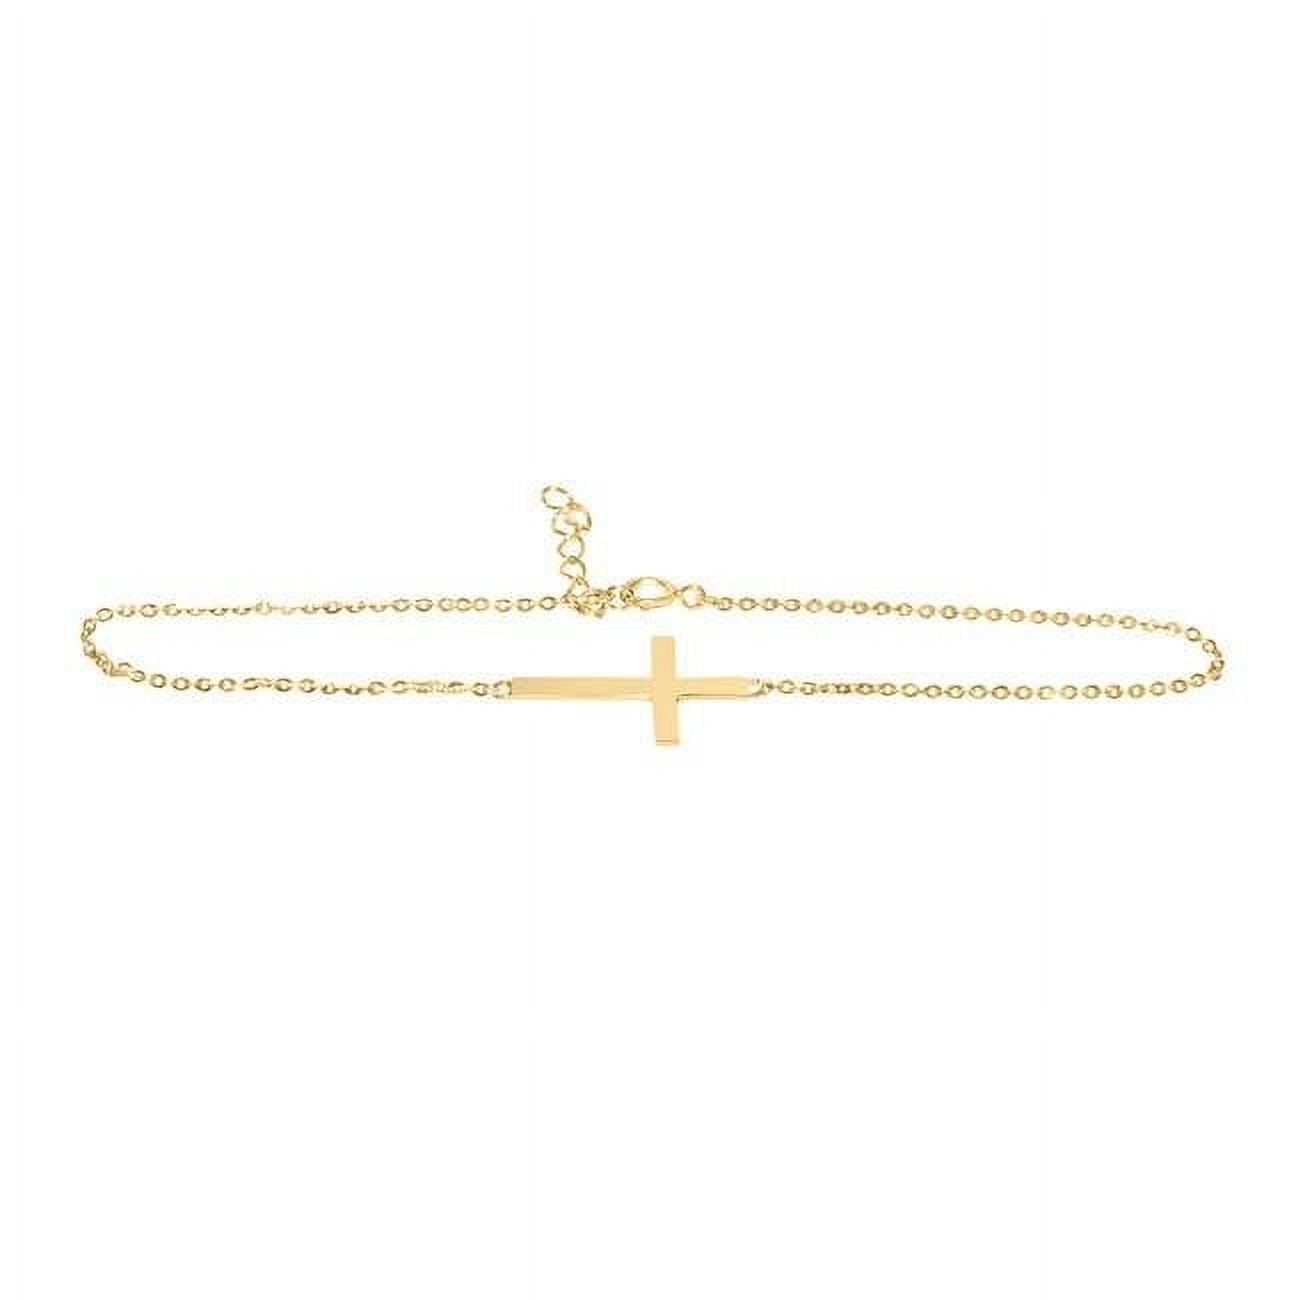 Ab-0316 14k Yellow Gold Sideways Cross Chain Bracelet